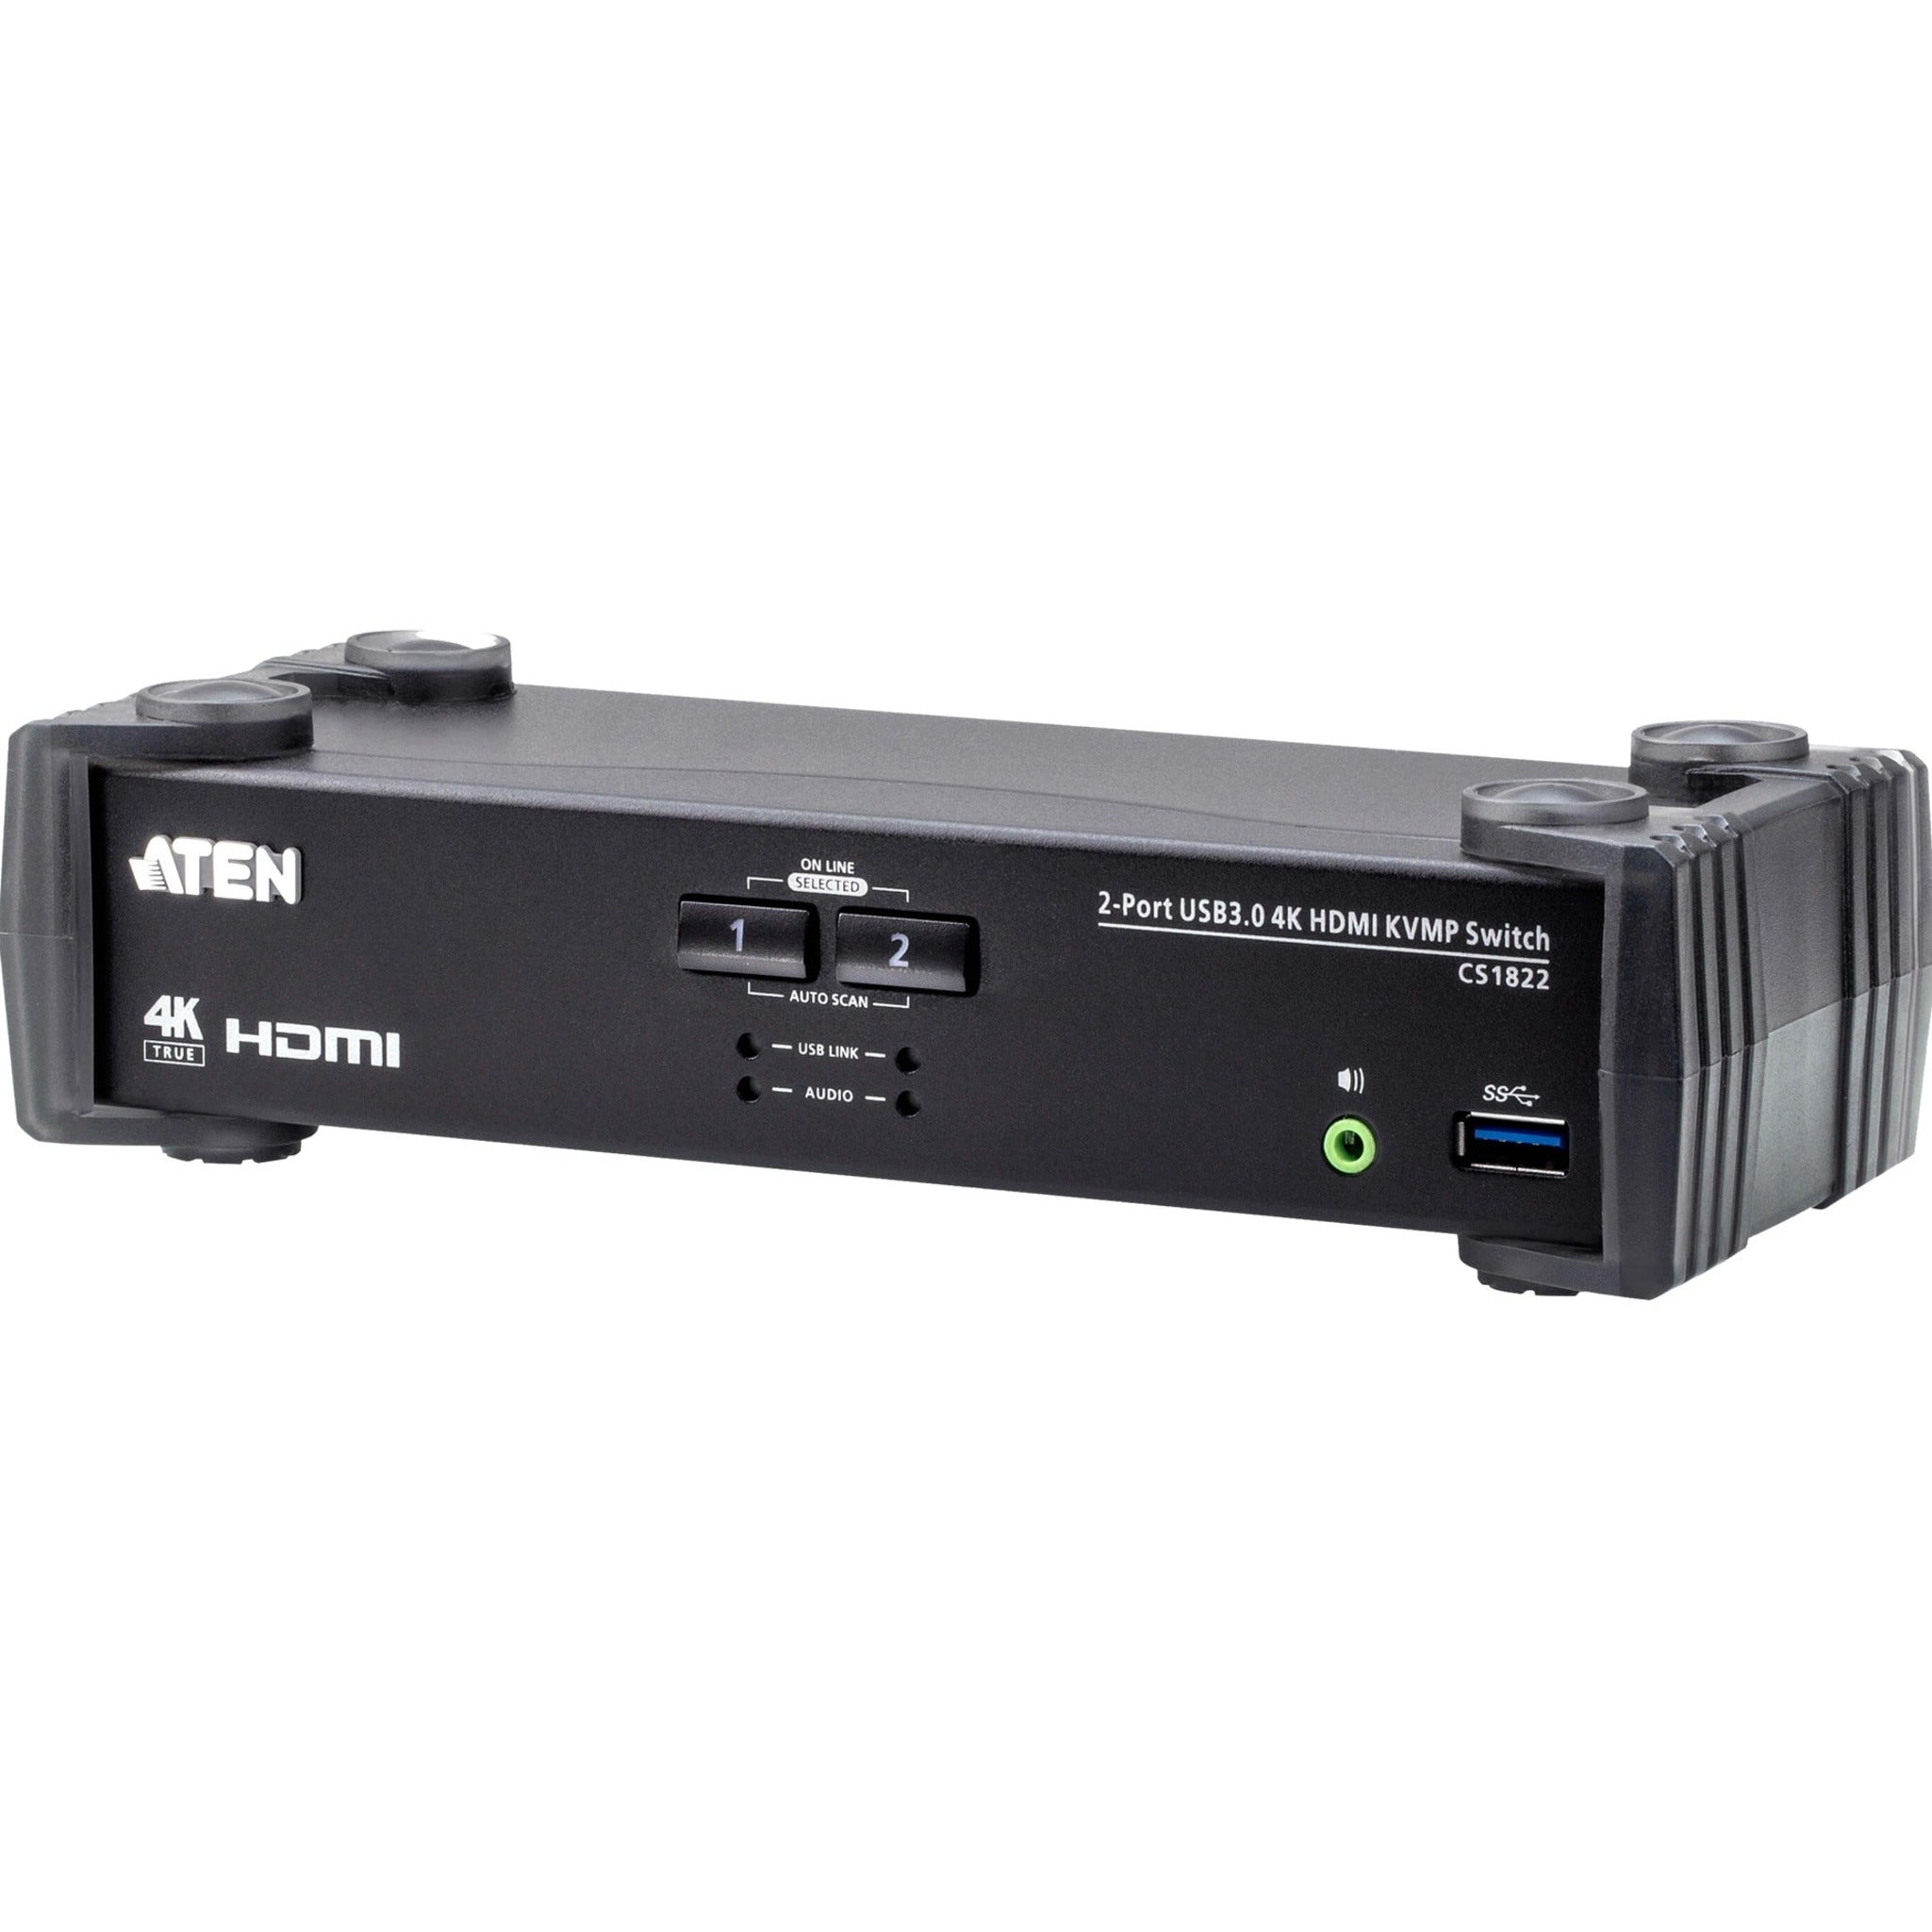 ATEN CS1822 2-Port USB 3.0 4K HDMI KVMP スイッチ、最大ビデオ解像度4096 x 2160 ブランド名: ATEN ブランド名の翻訳: ATEN (アテン)